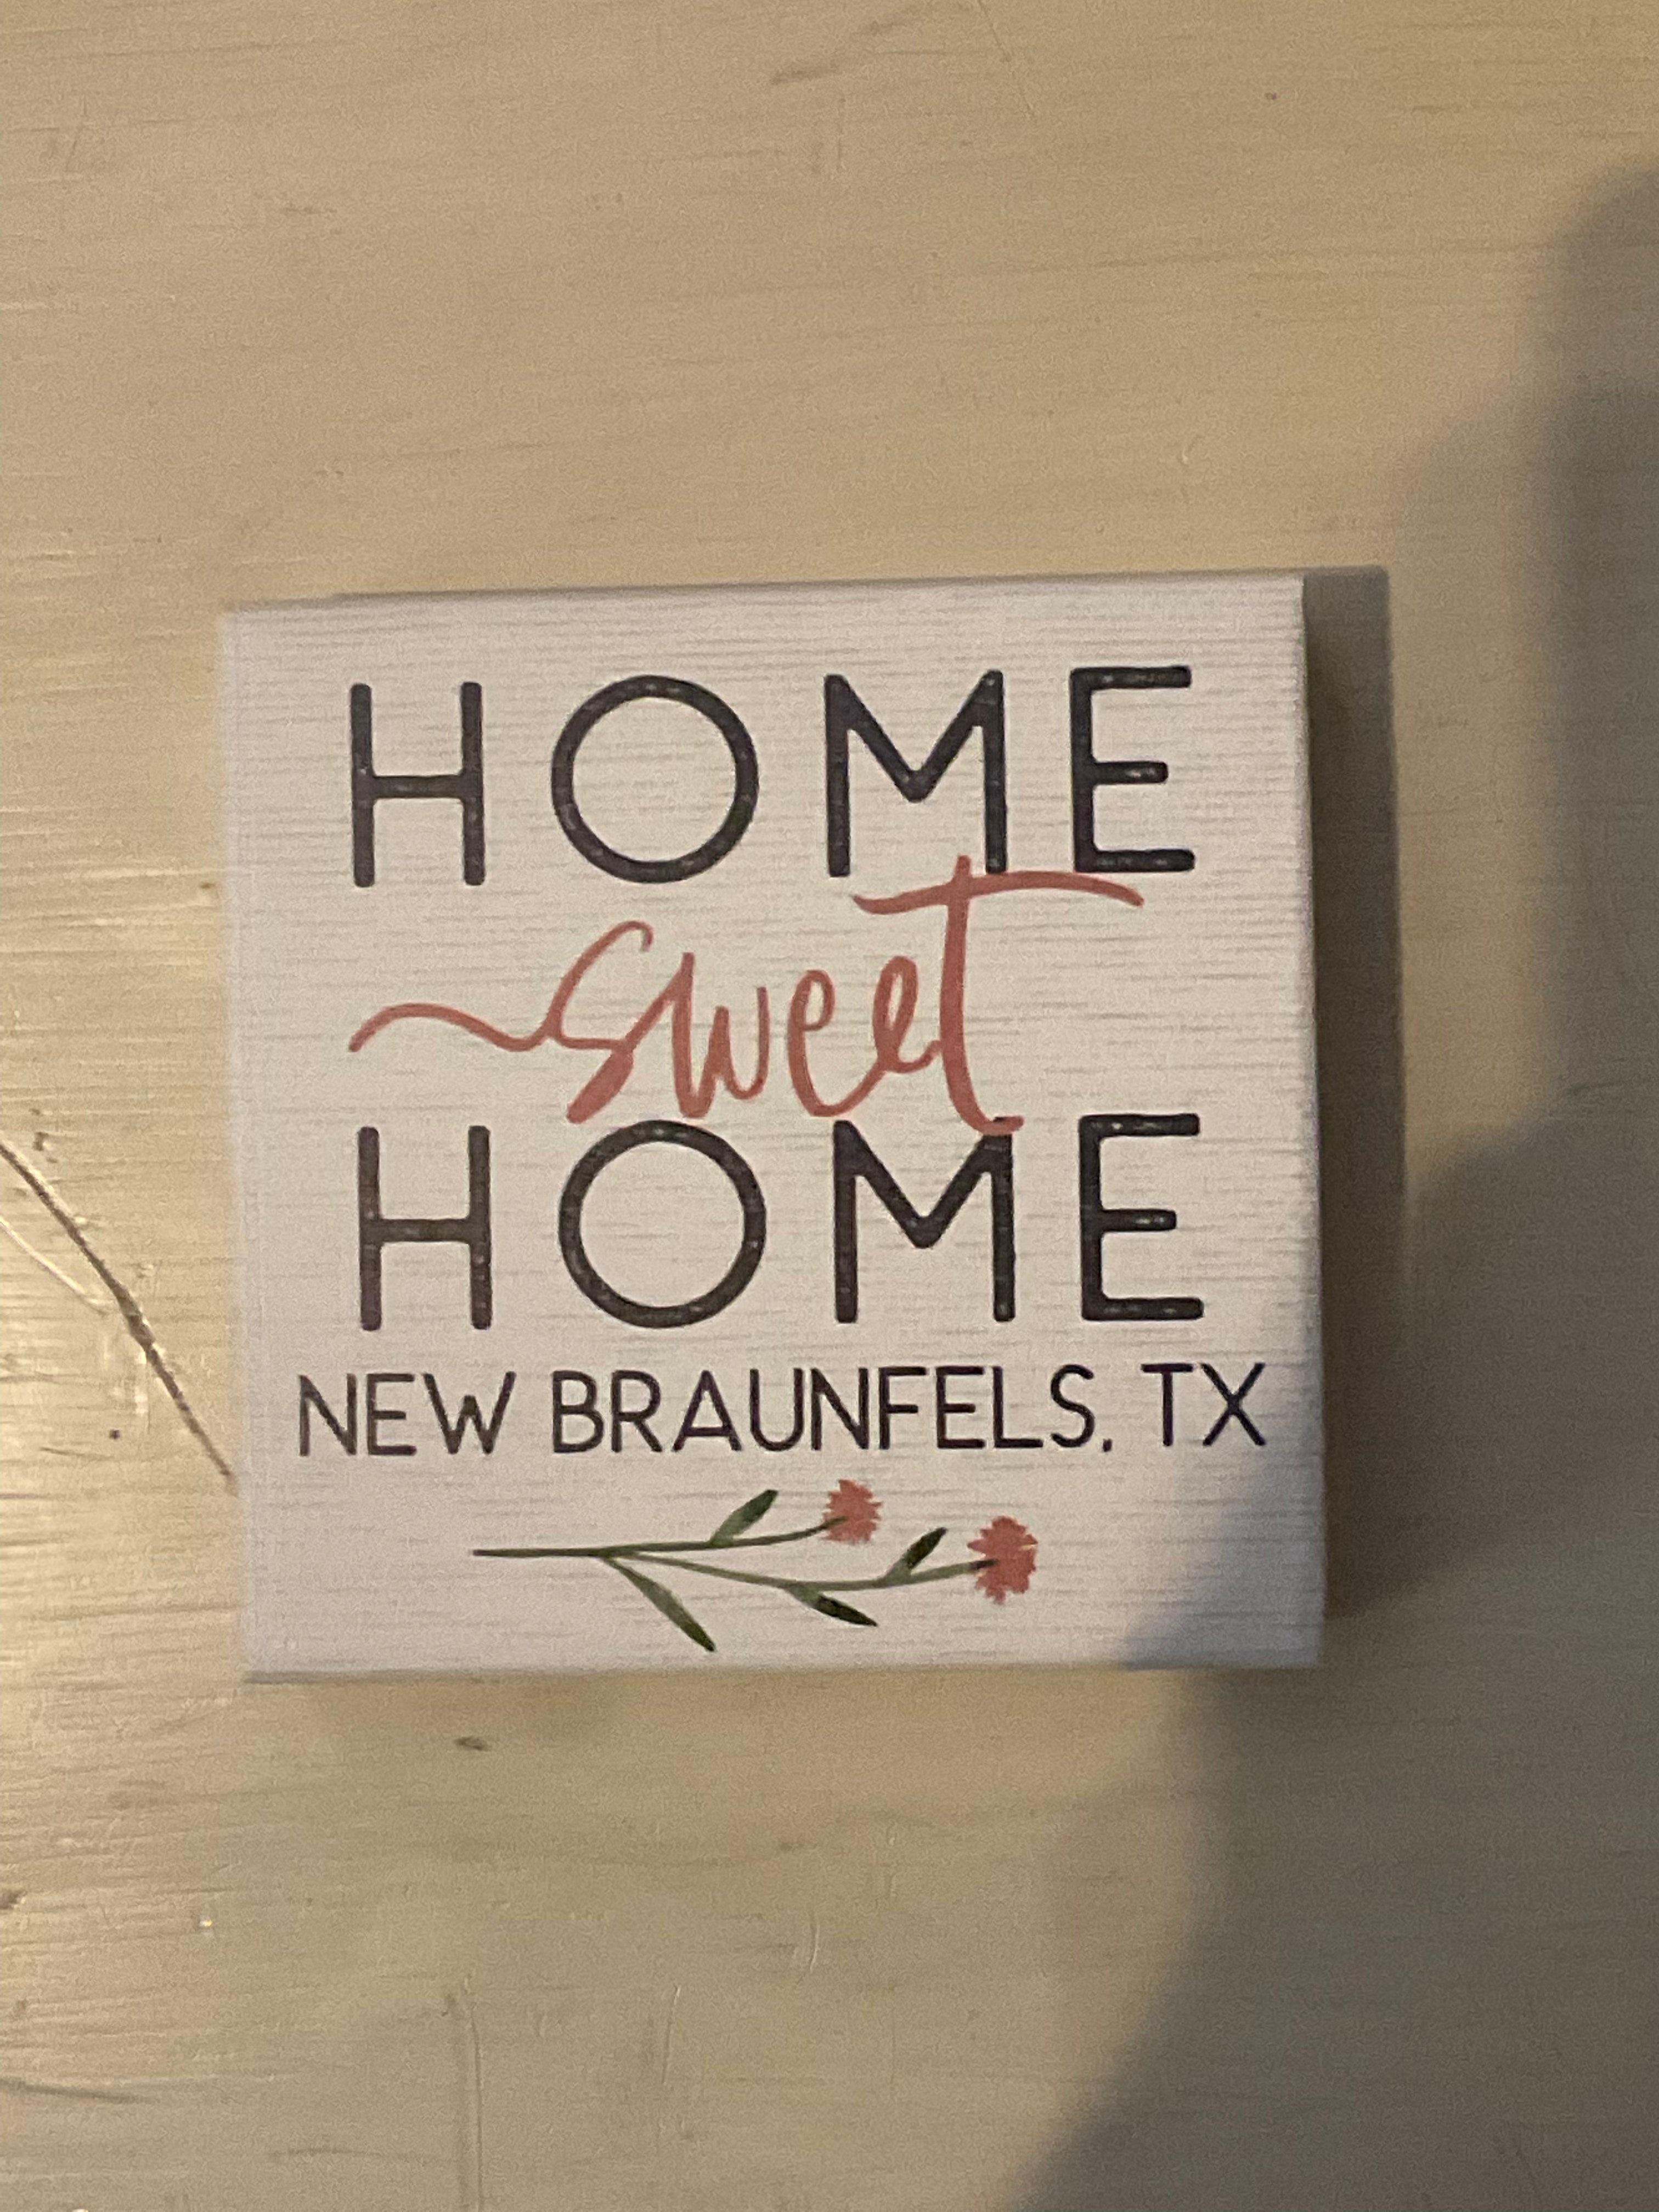 Home Sweet Home New Braunfels, TX